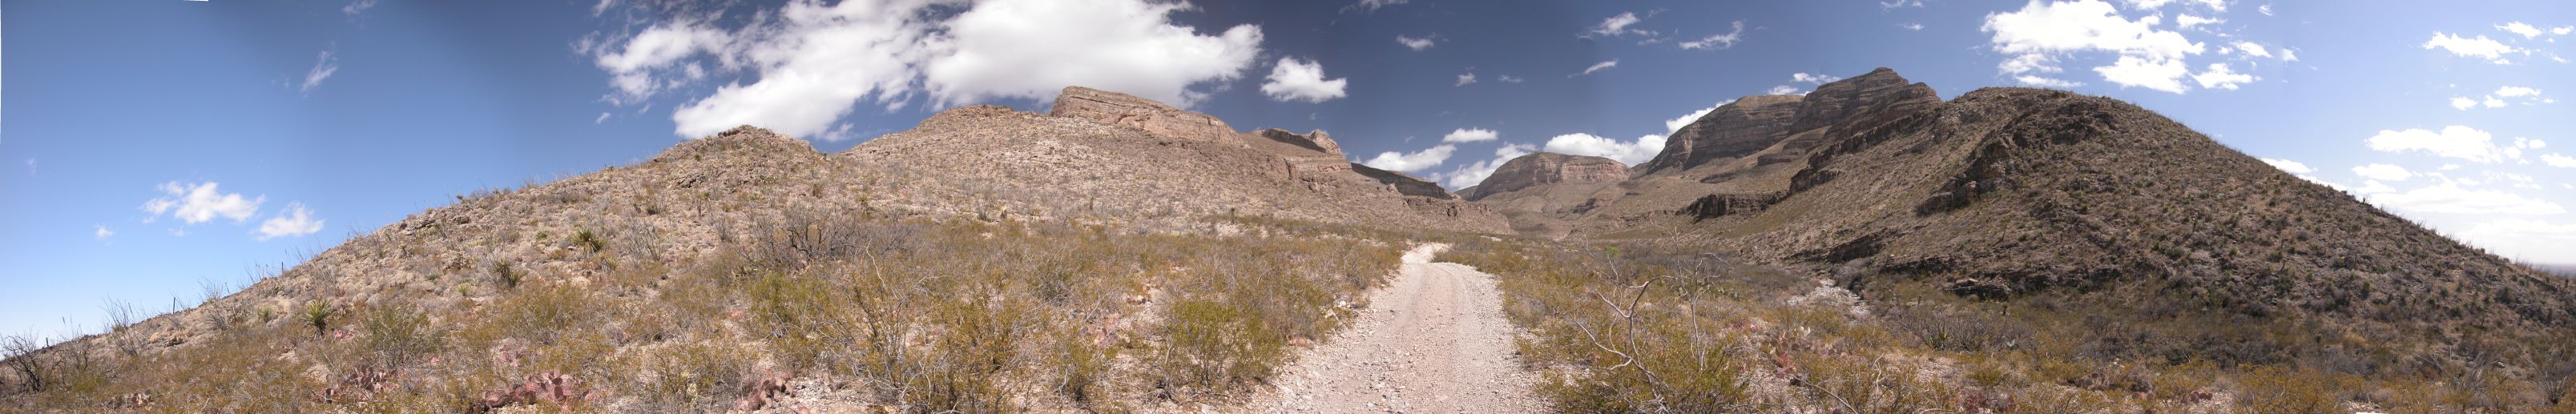 San Andres Canyon entrance panorama